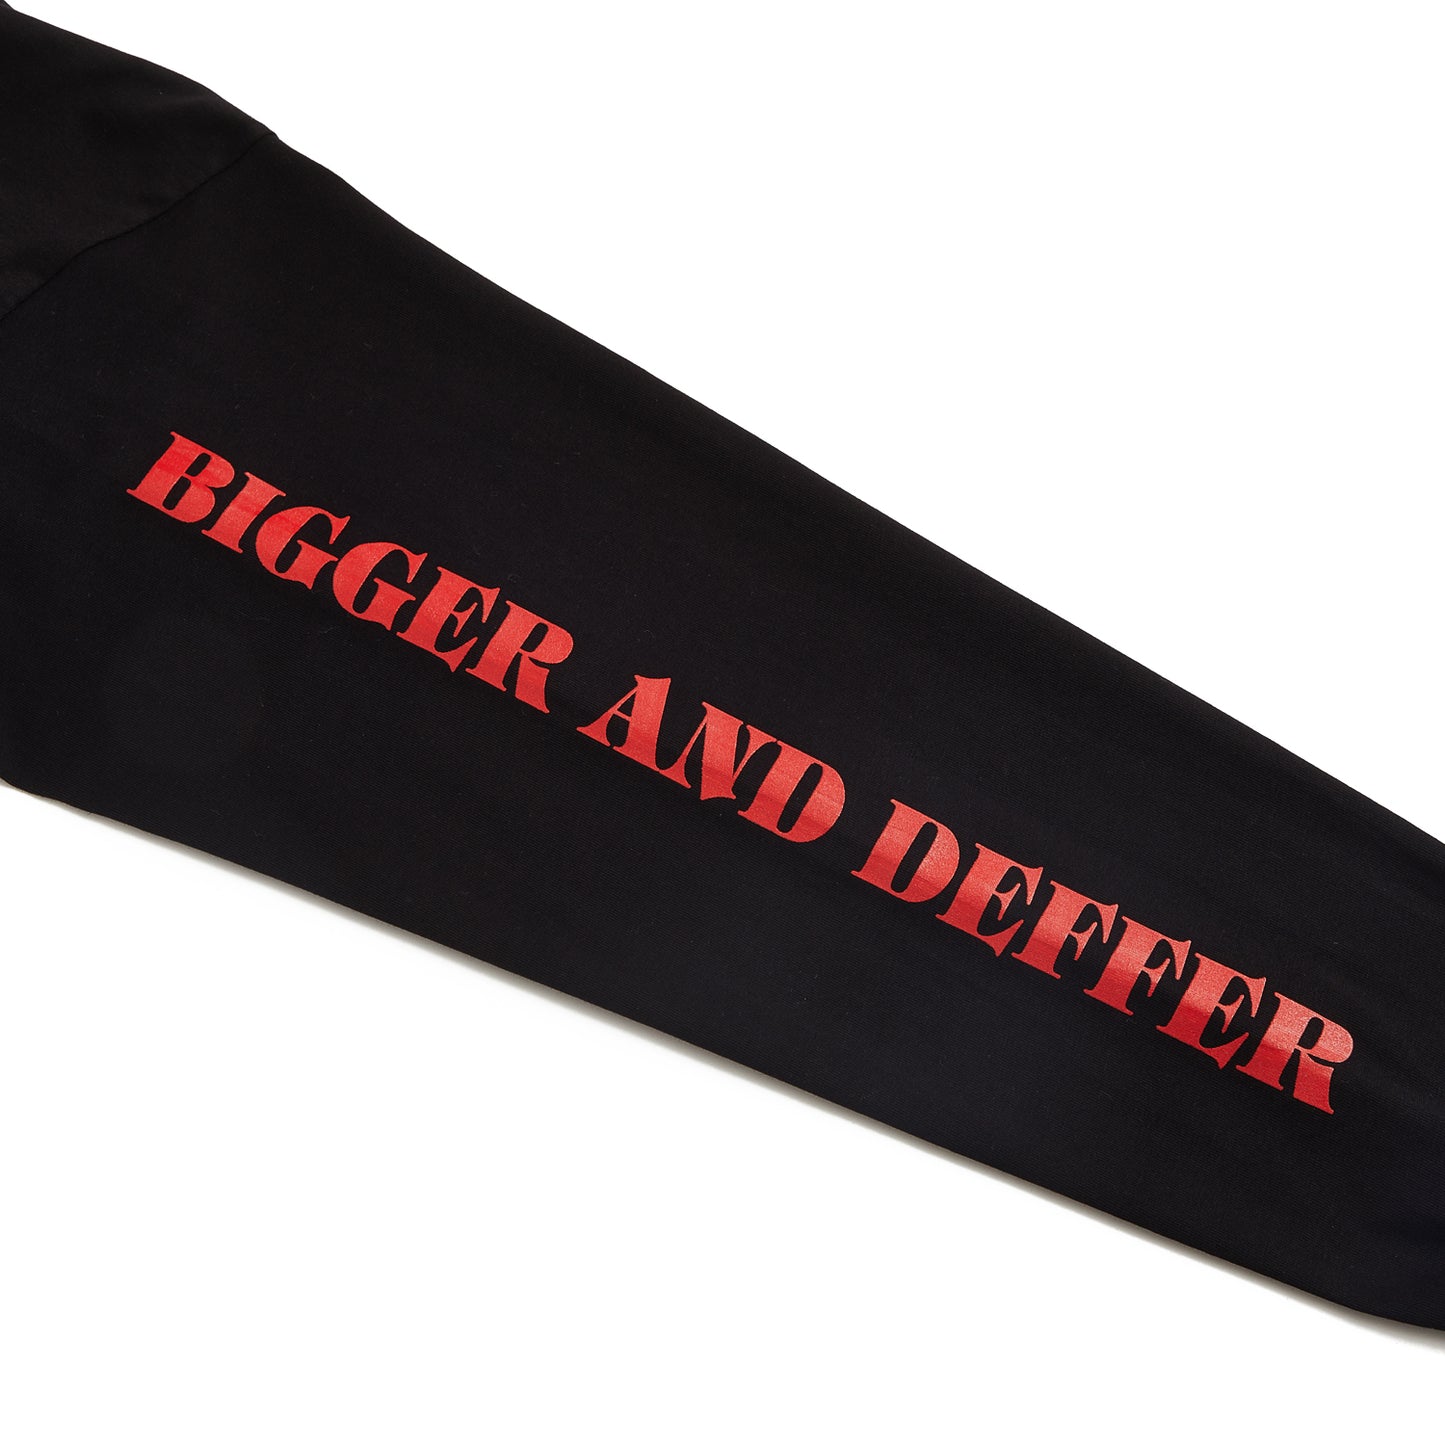 Bigger & Deffer 35th Anniversary Long Sleeve Tee